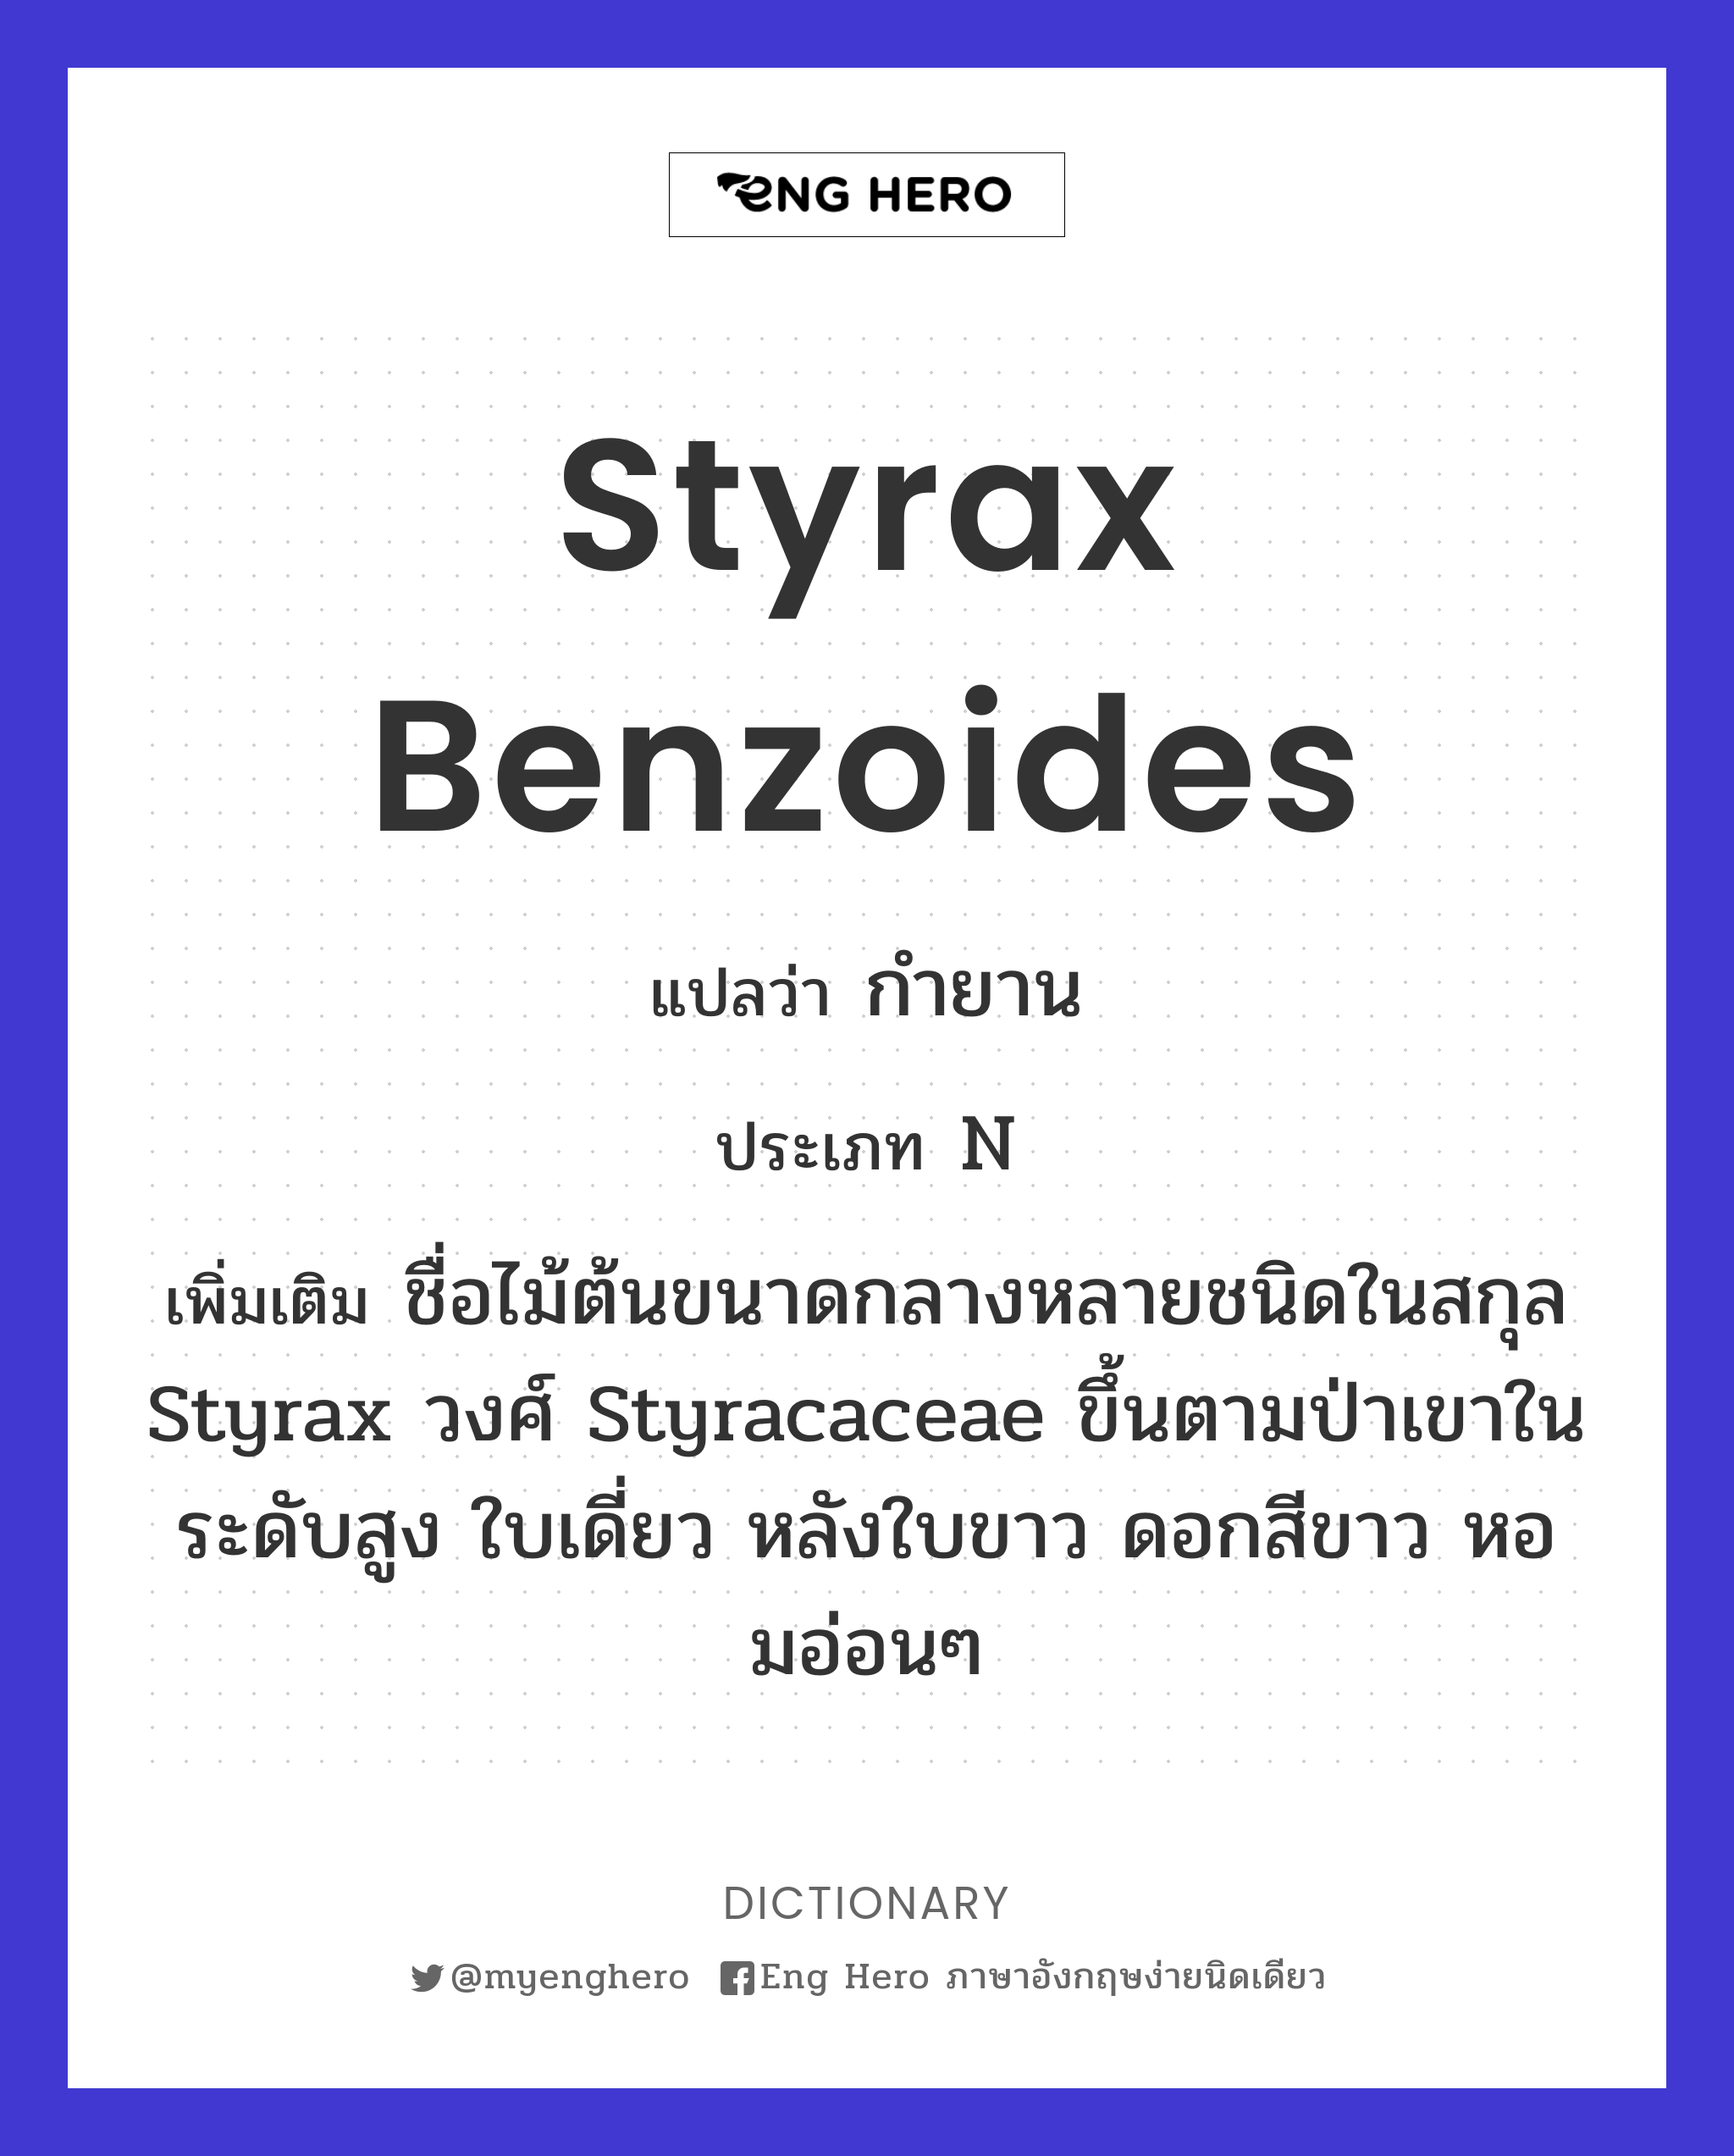 Styrax benzoides